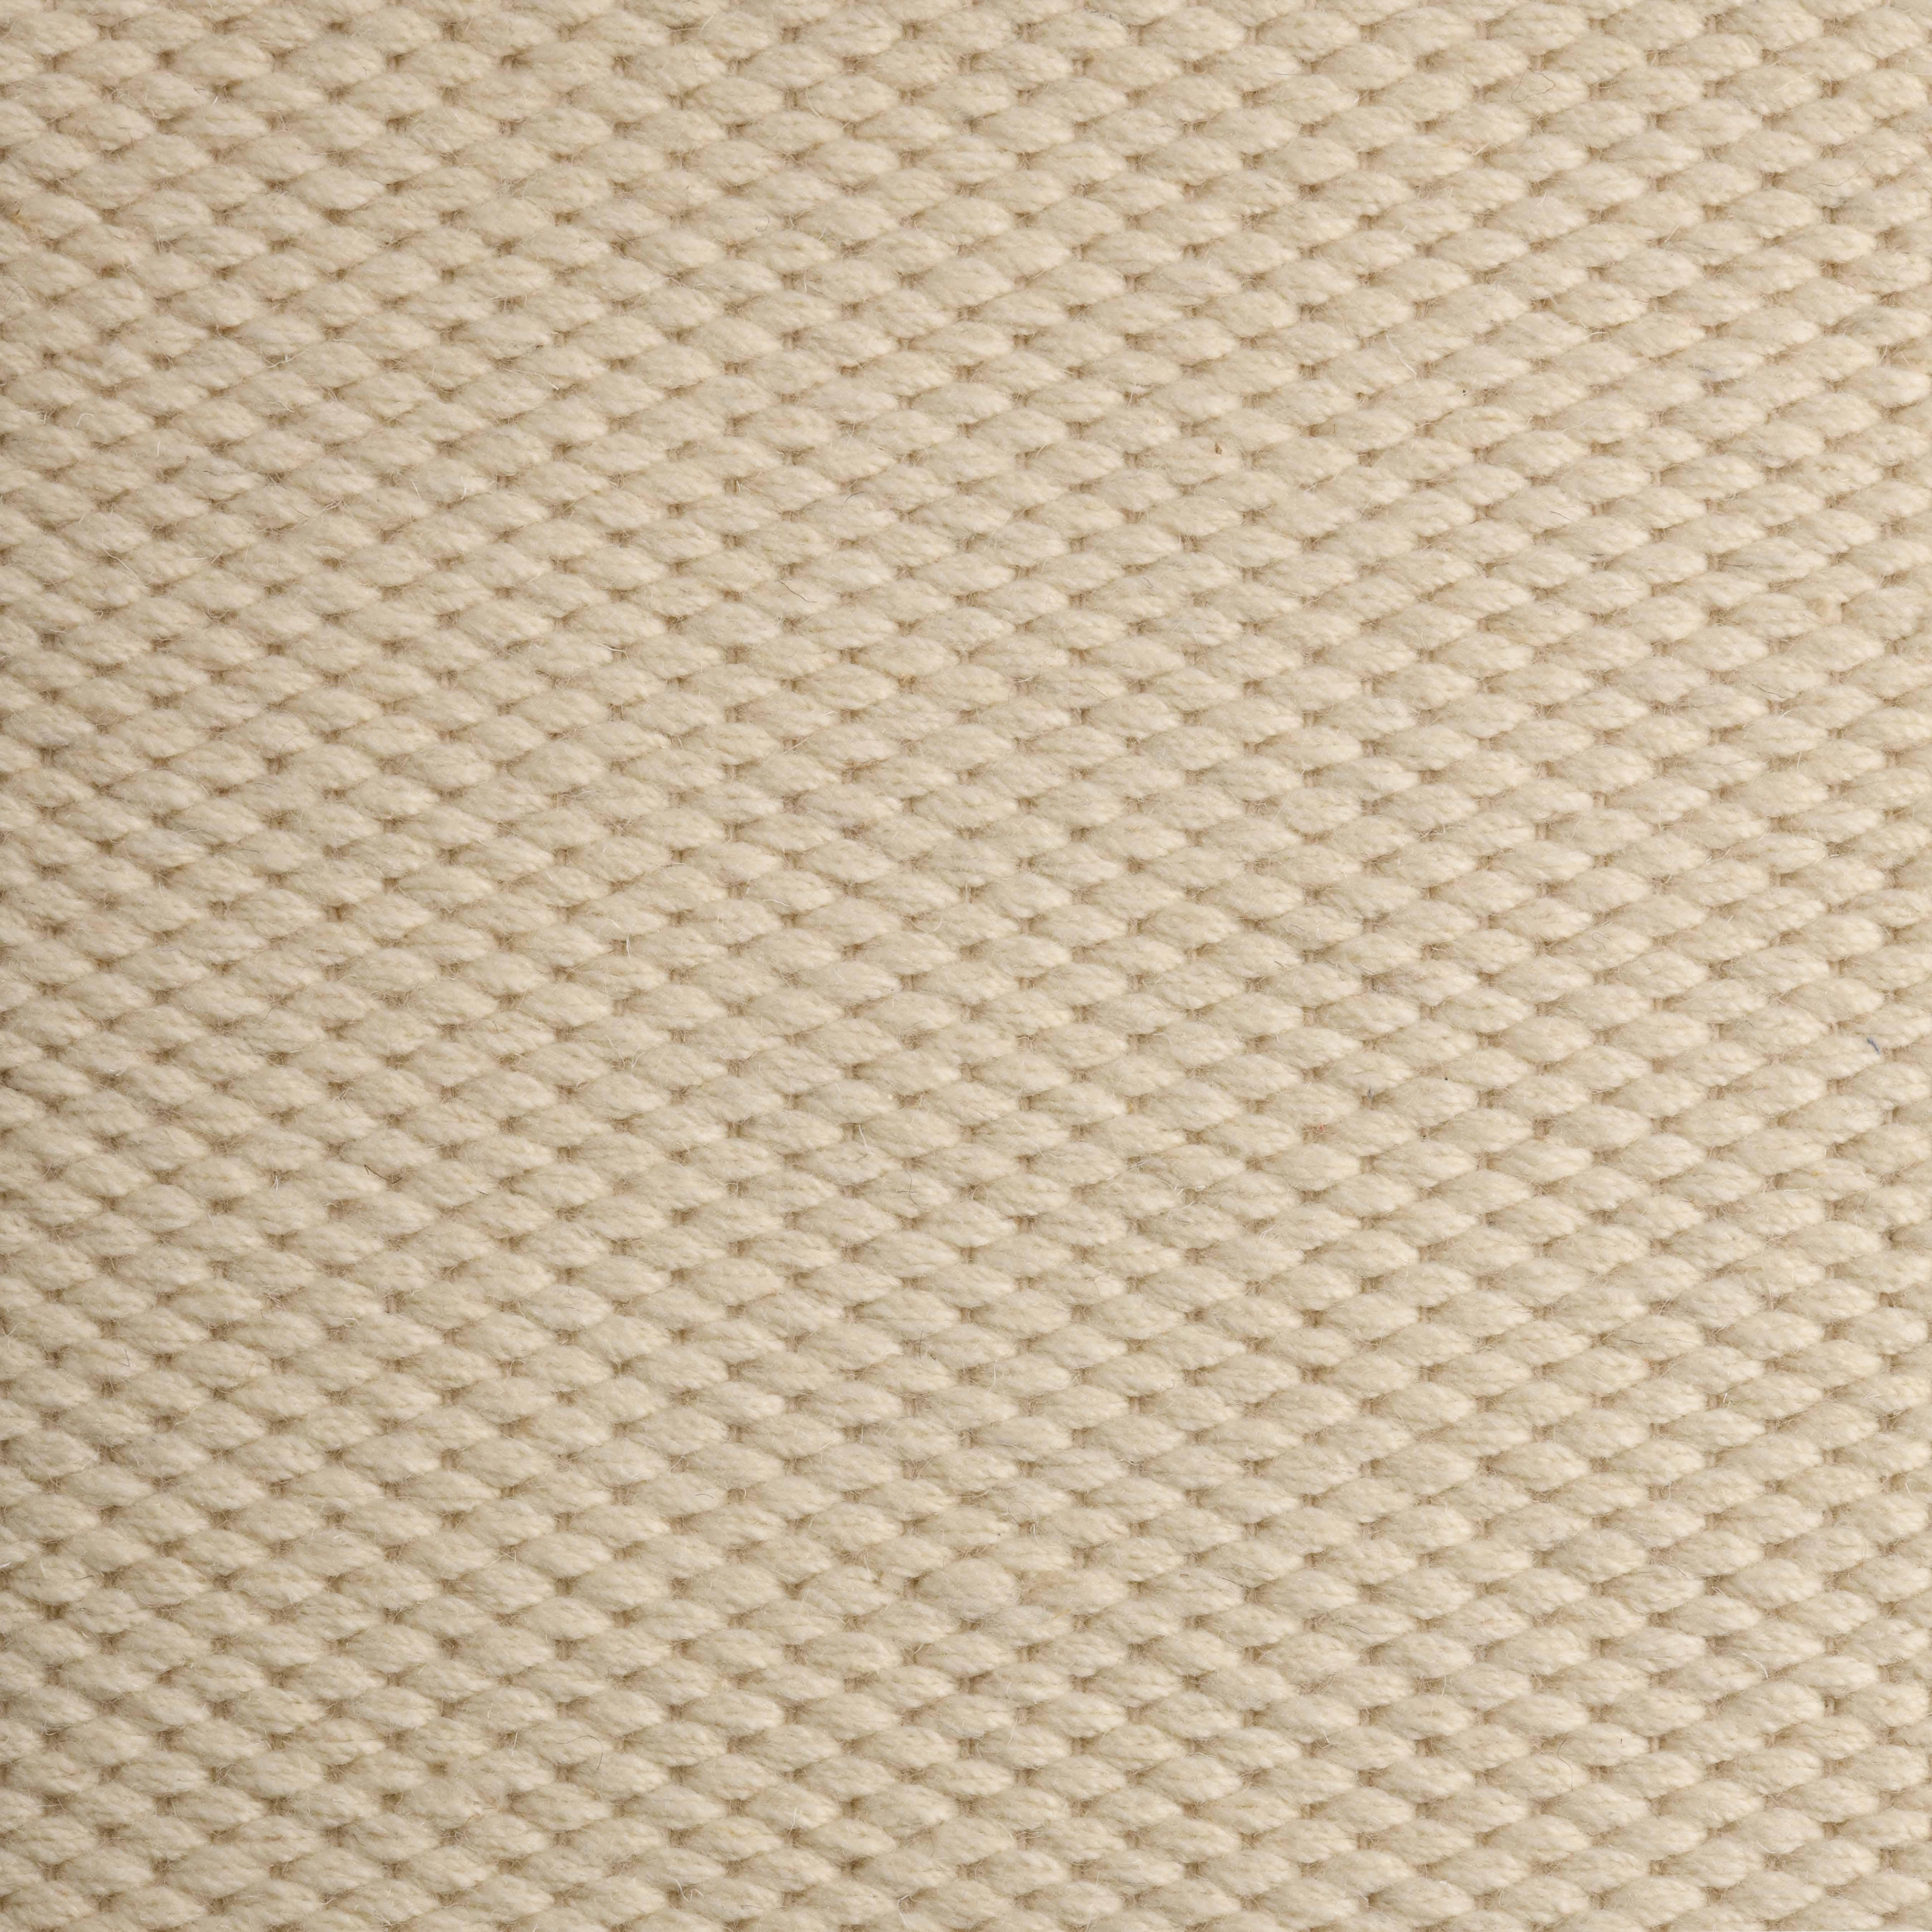 Quies, Ivory, Handwoven, New Zealand and Mediterranean wools, 6' x 9'